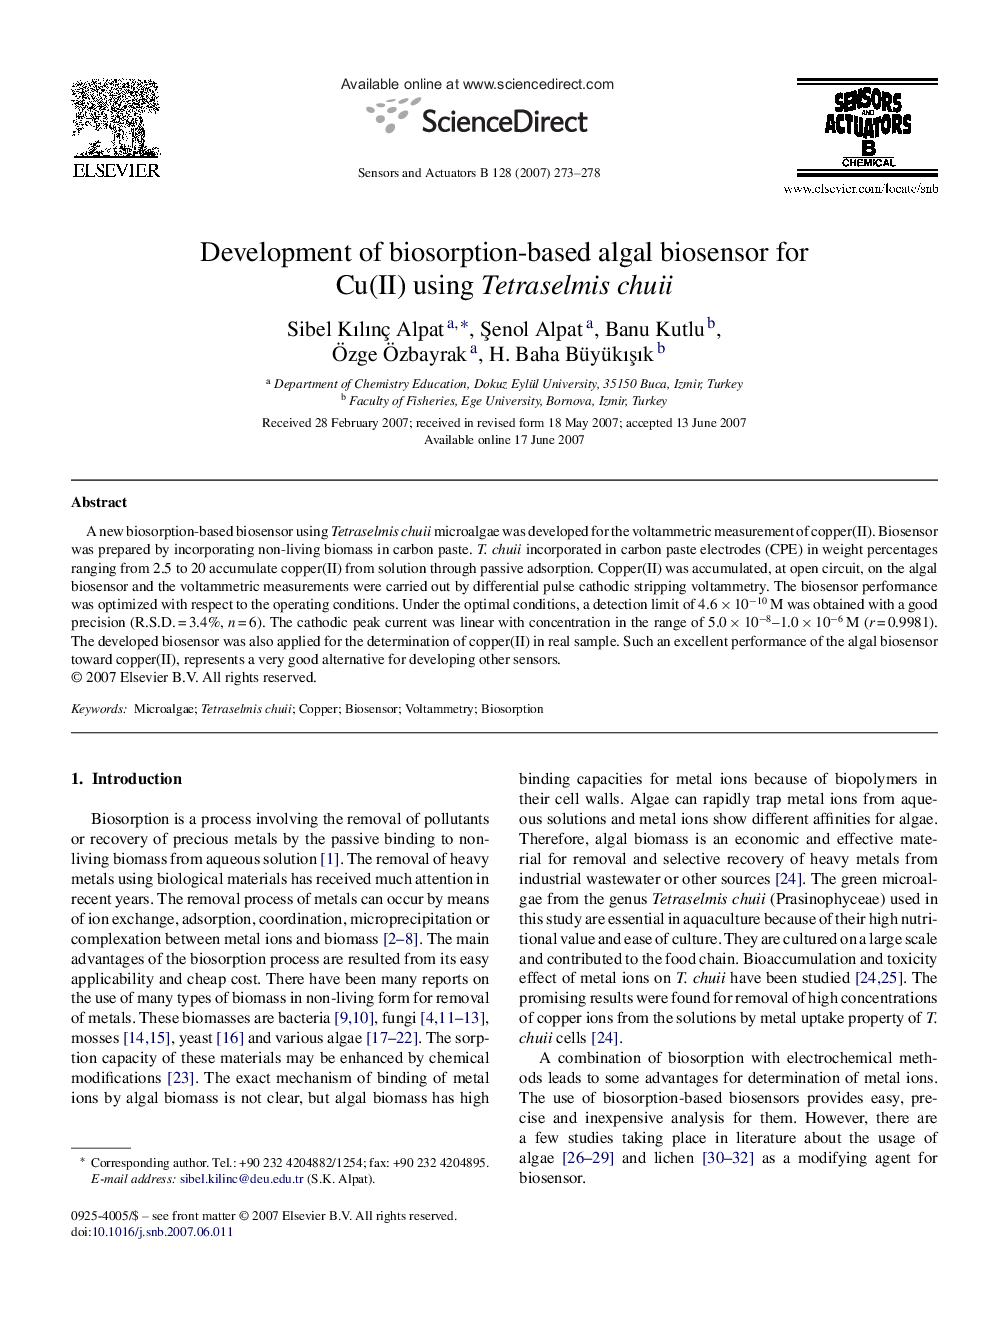 Development of biosorption-based algal biosensor for Cu(II) using Tetraselmis chuii